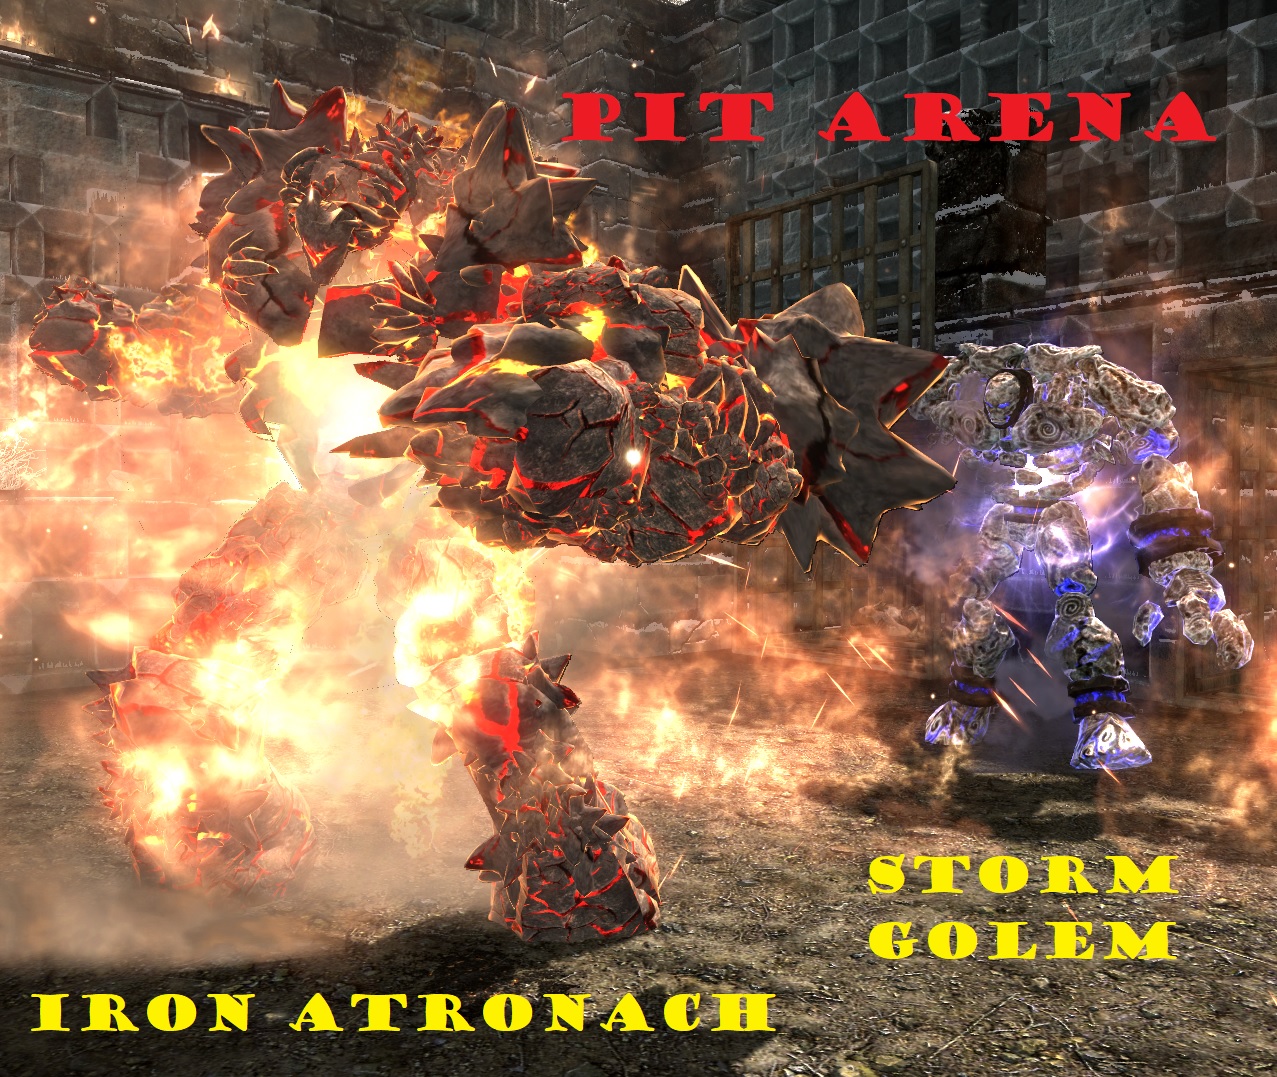 Iron Atronach and storm Golem